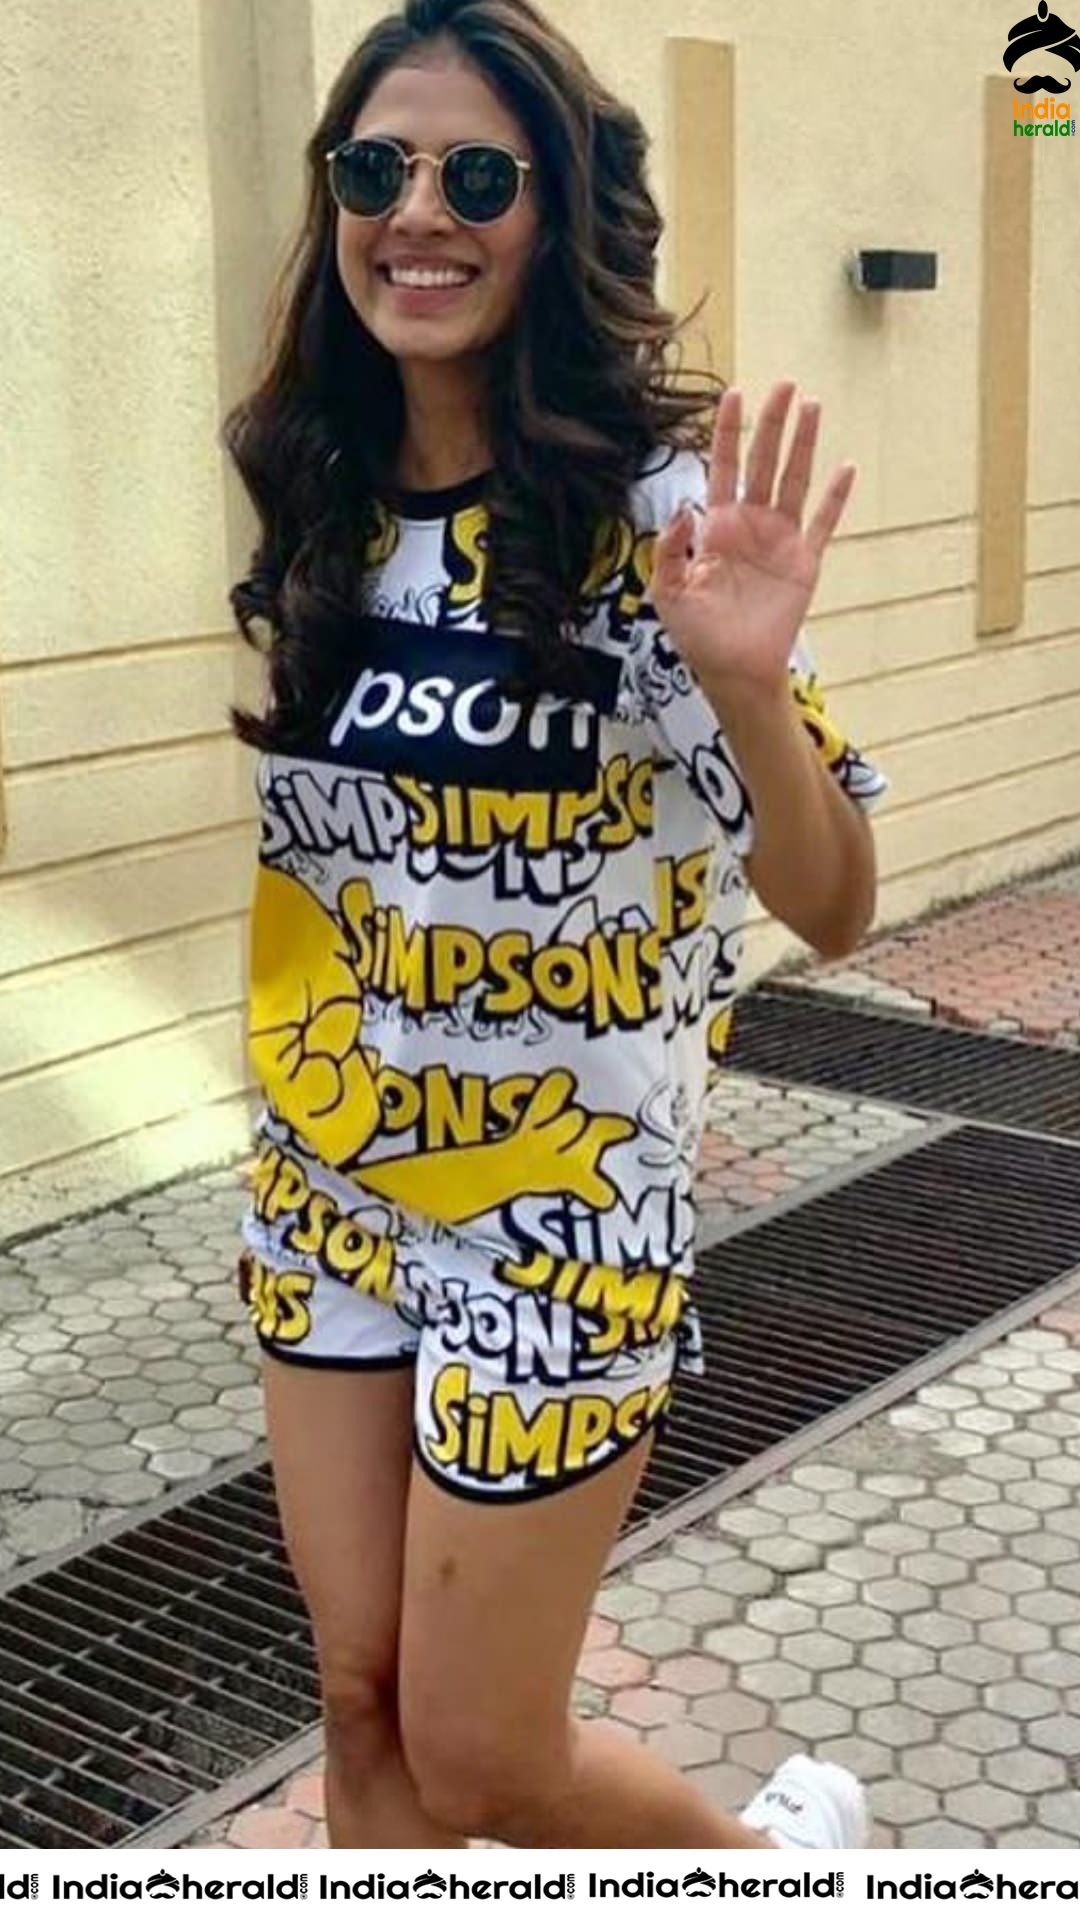 Latest Hot Clicks of Malavika Mohanan in Simpsons Dress exposing Slender Thighs